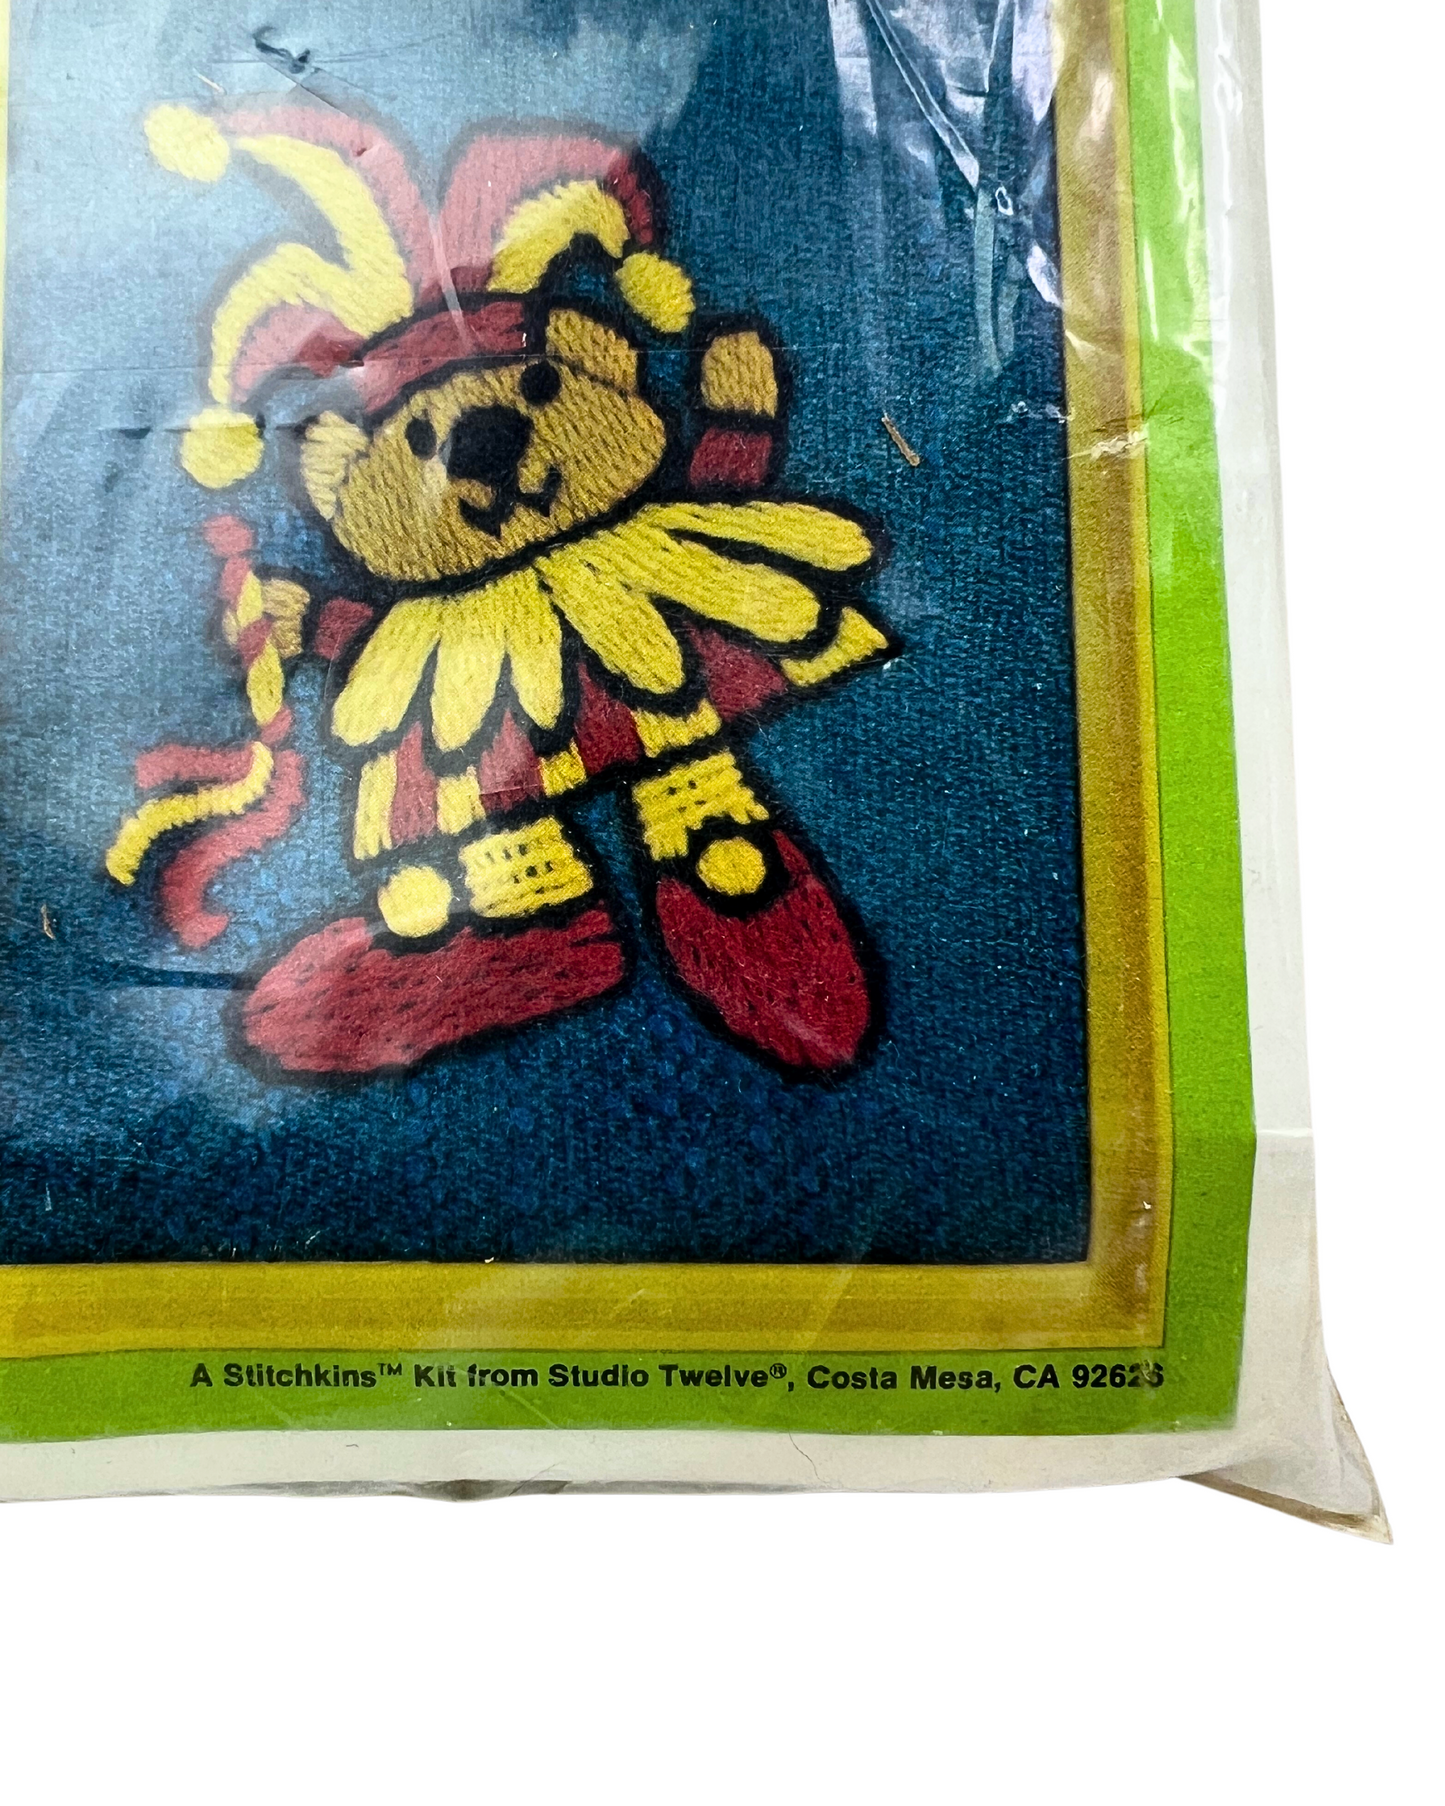 80’s Crewel Embroidery JESTER Bear 5 x 6 Cross-Stitch Kit